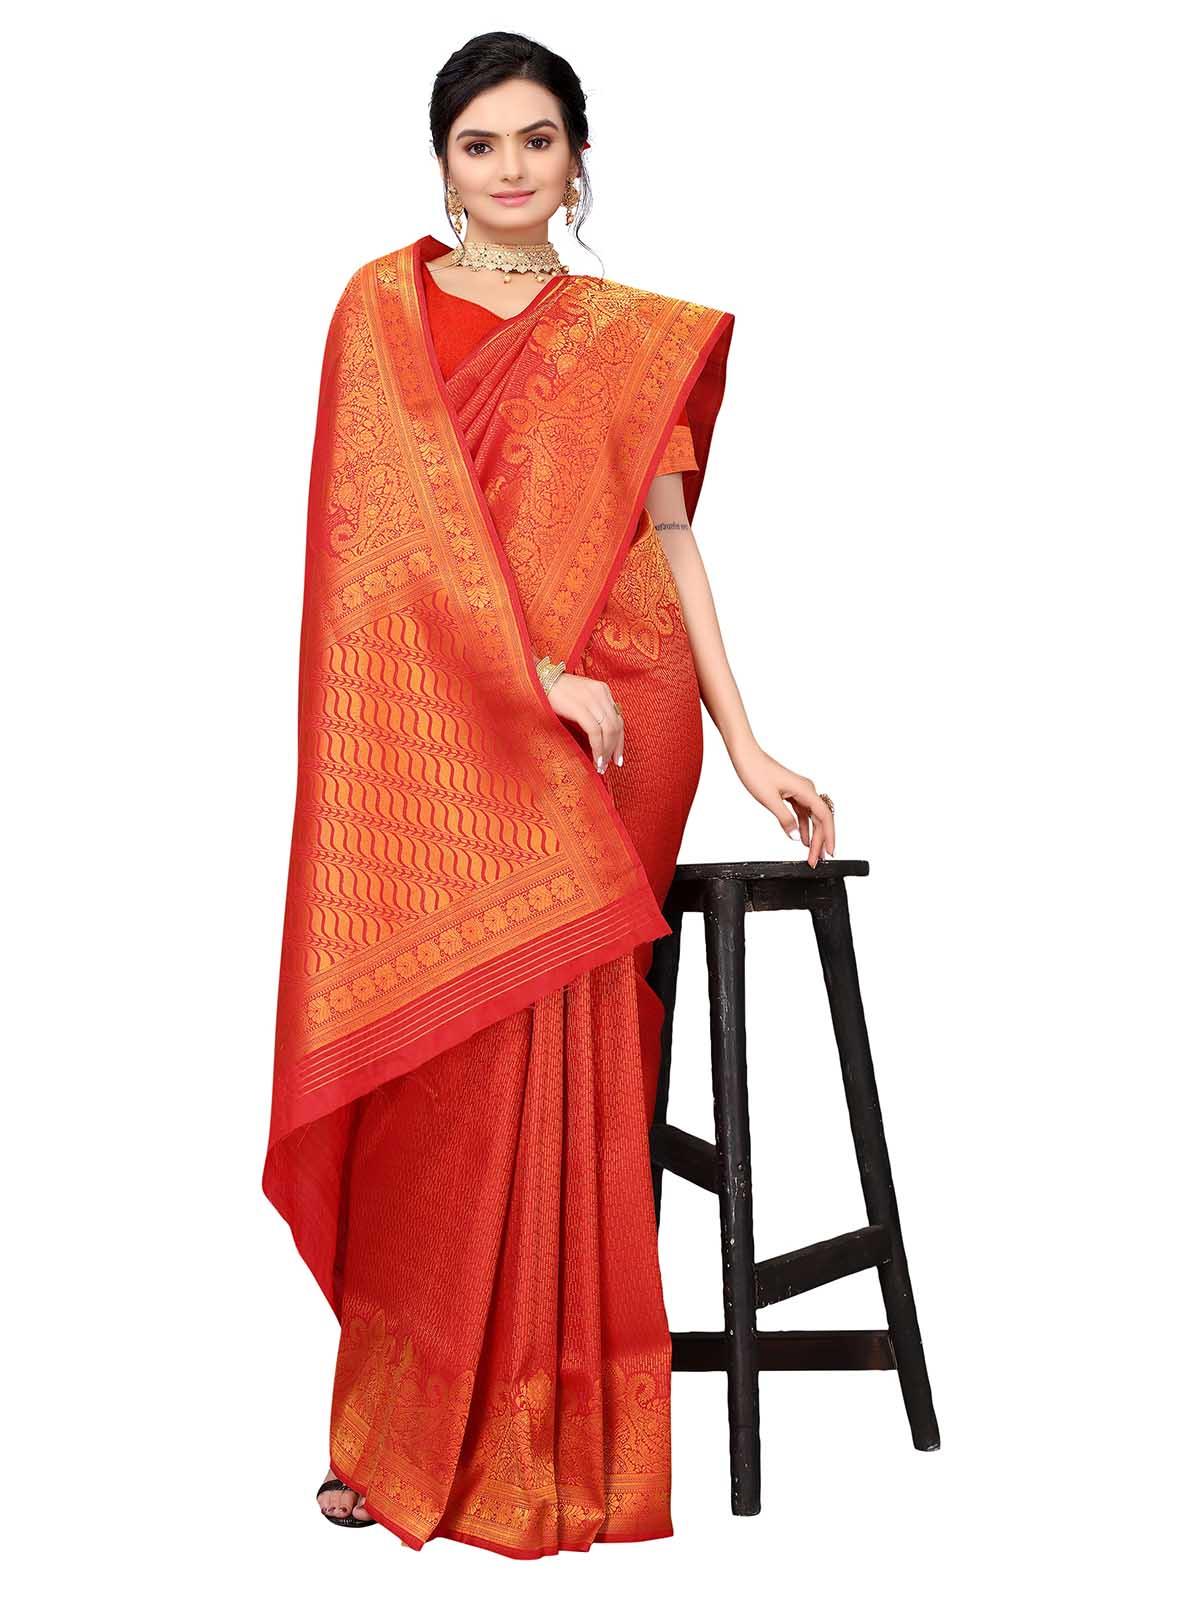 Orange Silk Blend Woven Saree With Blouse - Odette